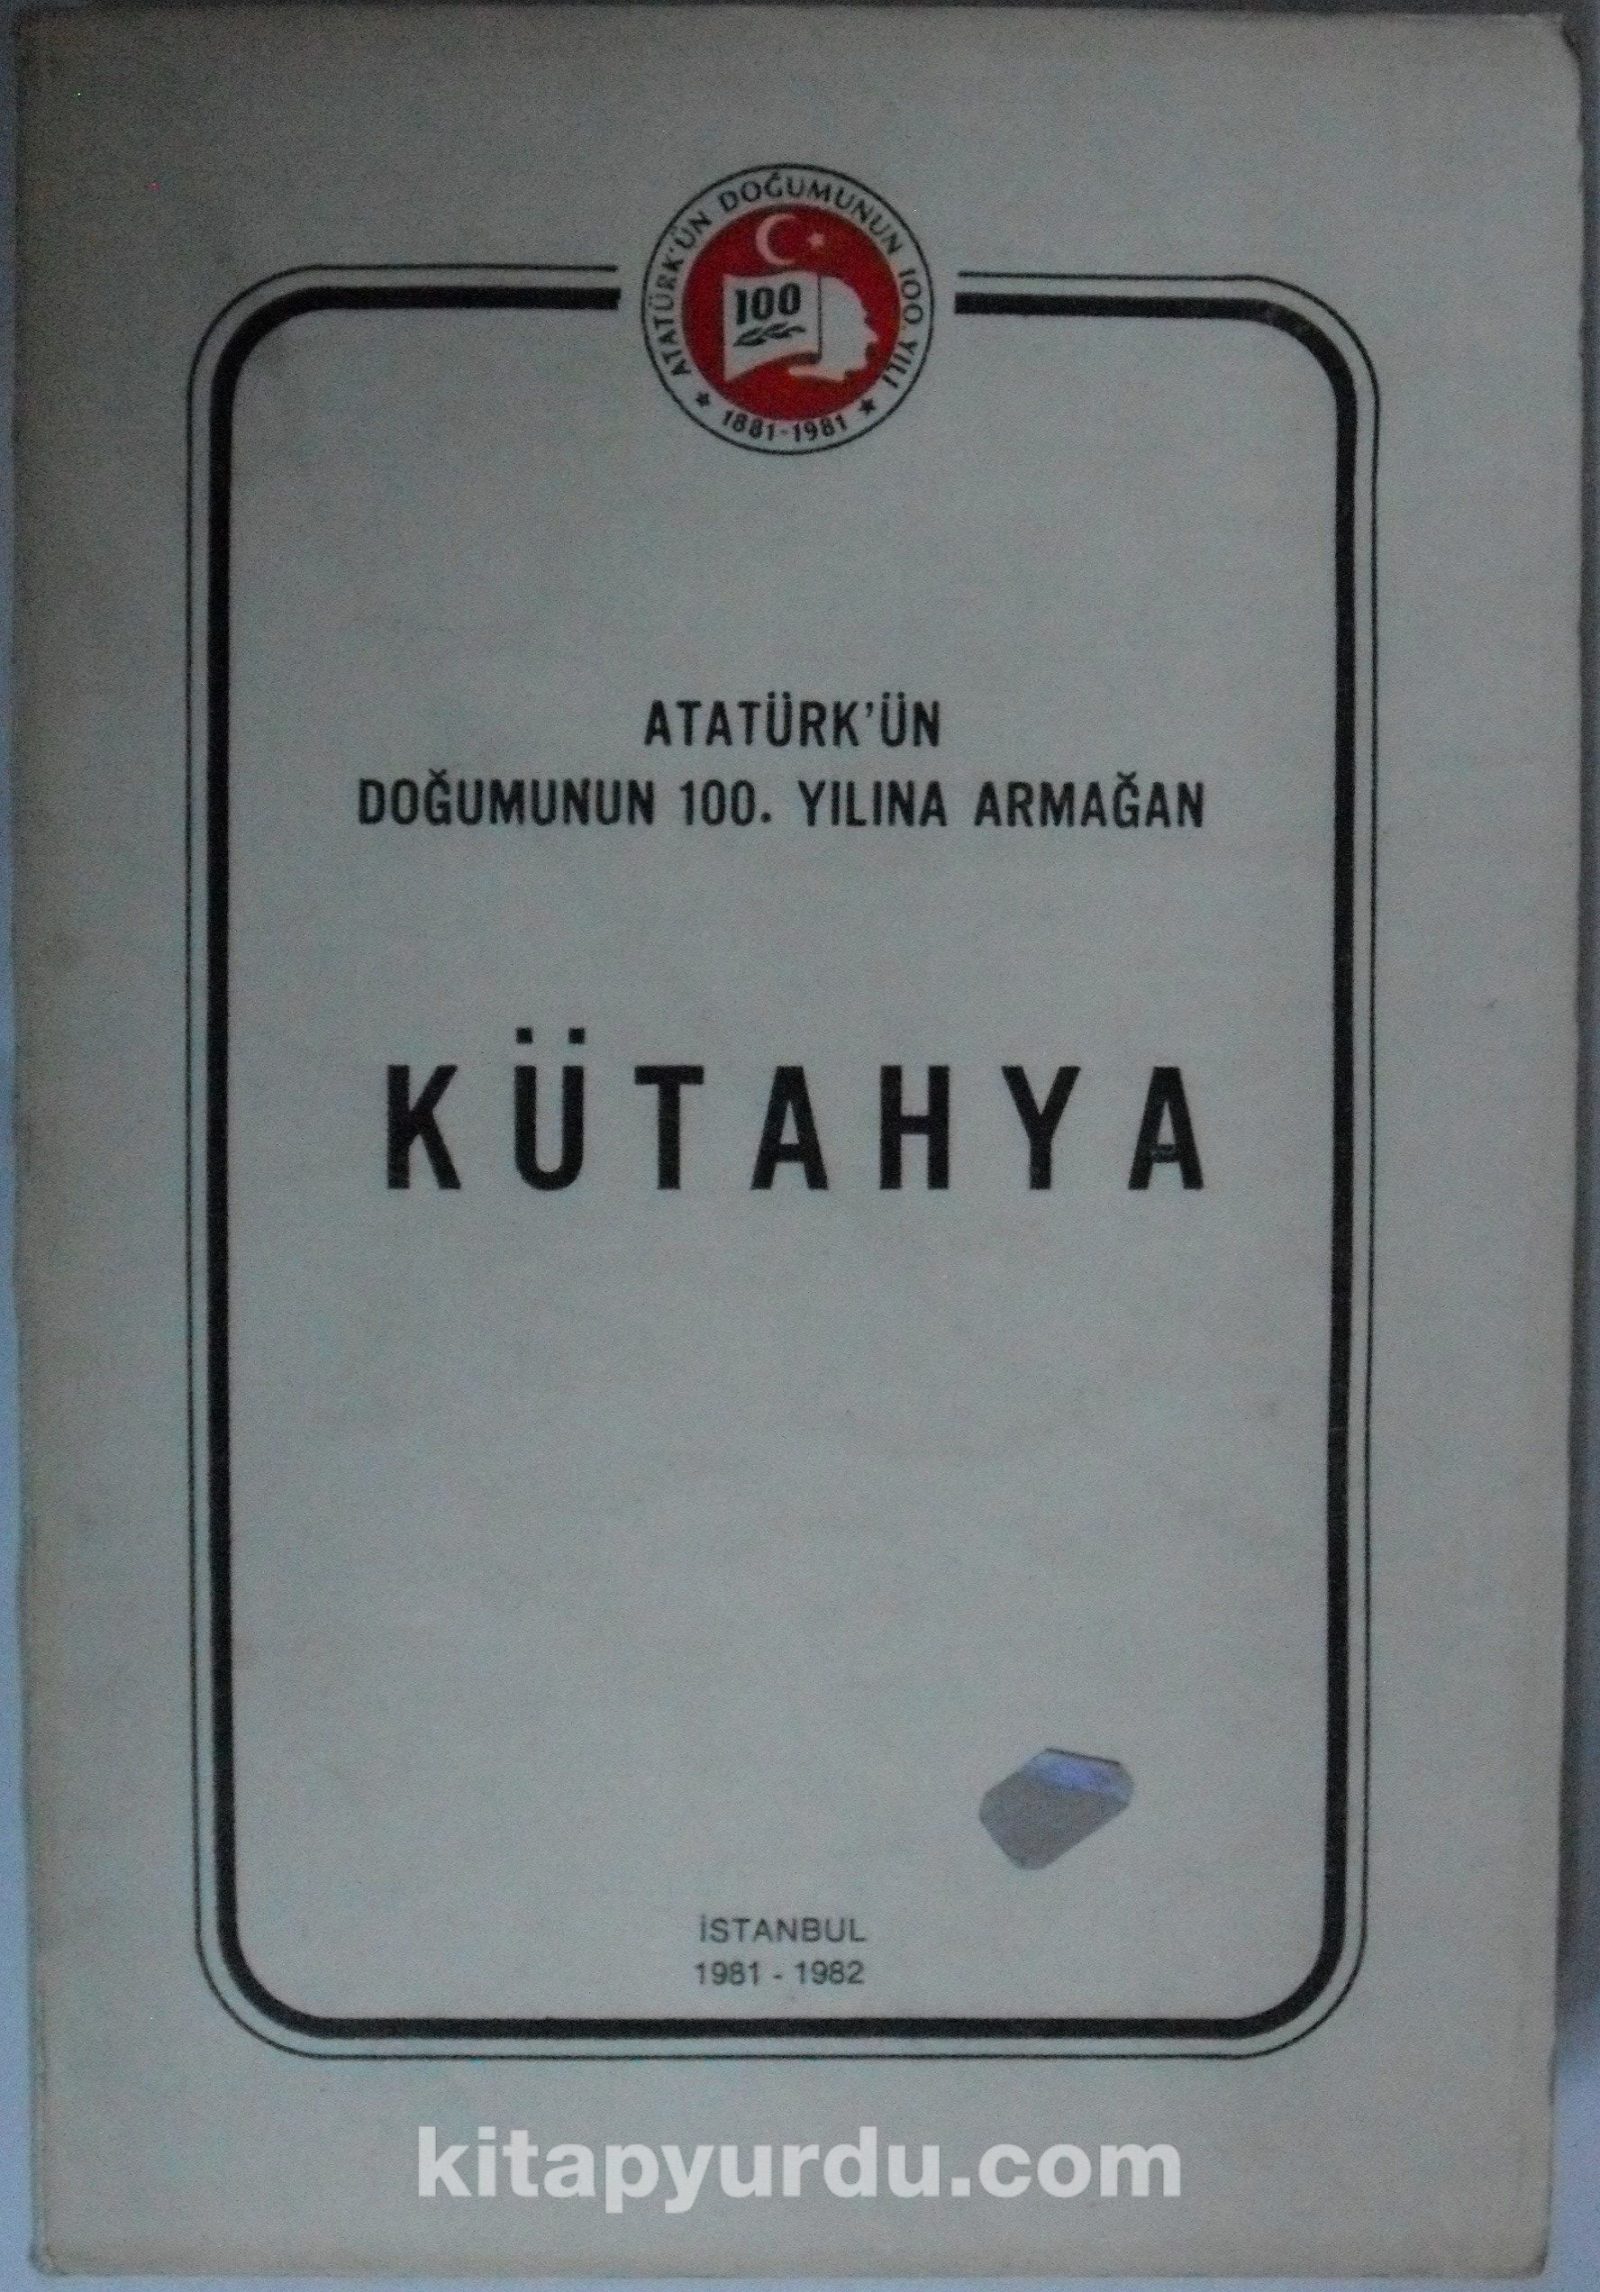 Atatürkün Doğumunun 100. Yılına Armağan Kütahya Kod: 6-E-26